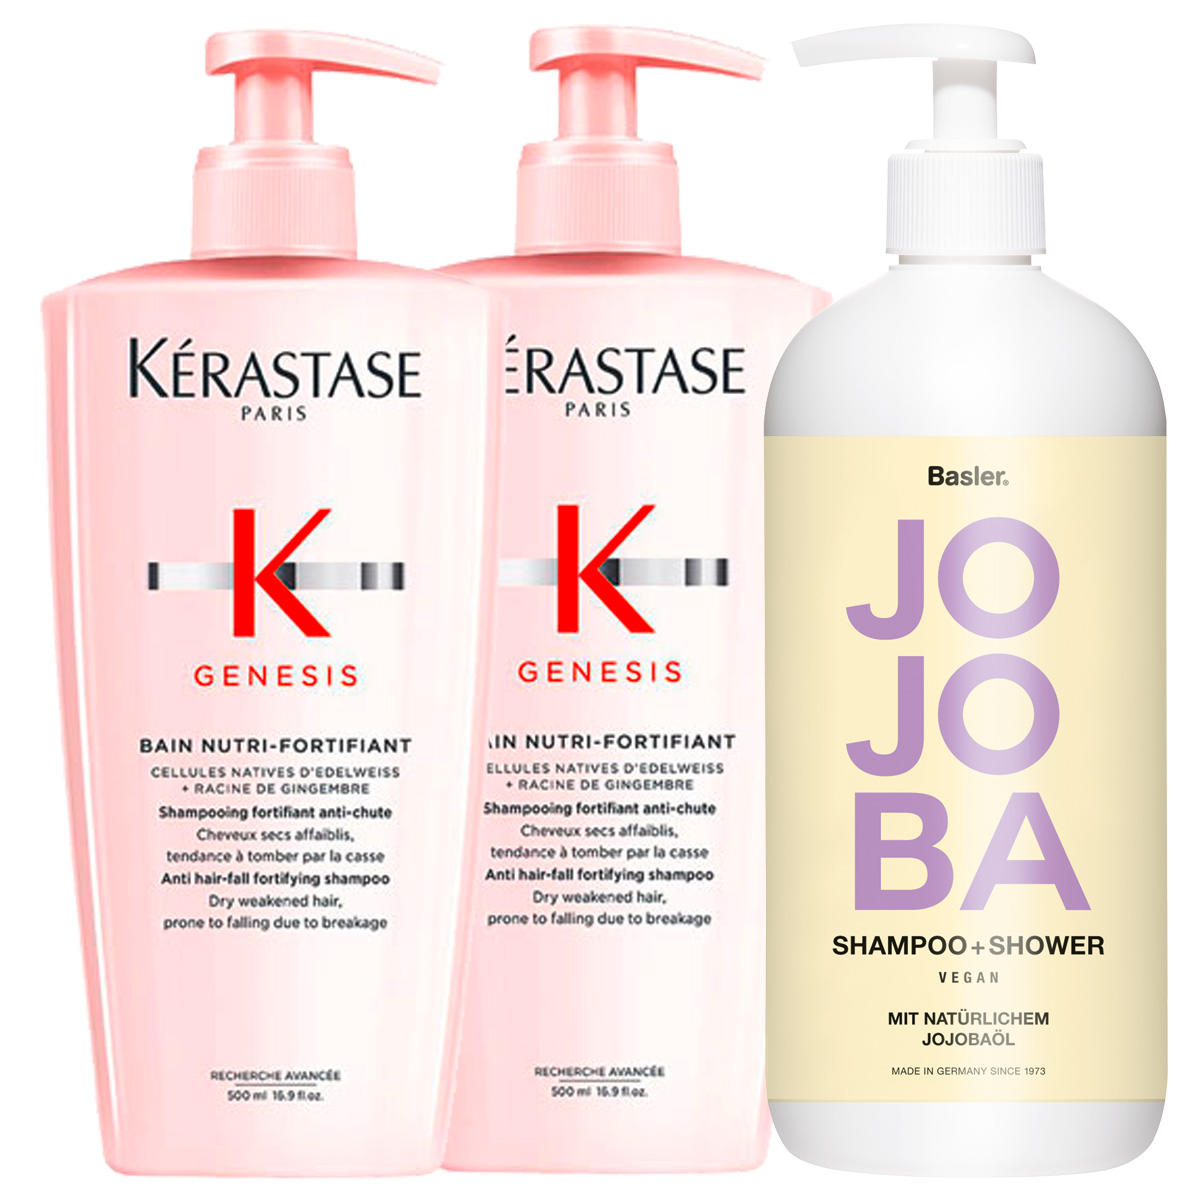 Kérastase Genesis Bain Nutri-Fortifiant Bundle 2 x 500 ml + Basler Jojoba Shampoo & Shower 500 ml gratuit - 1